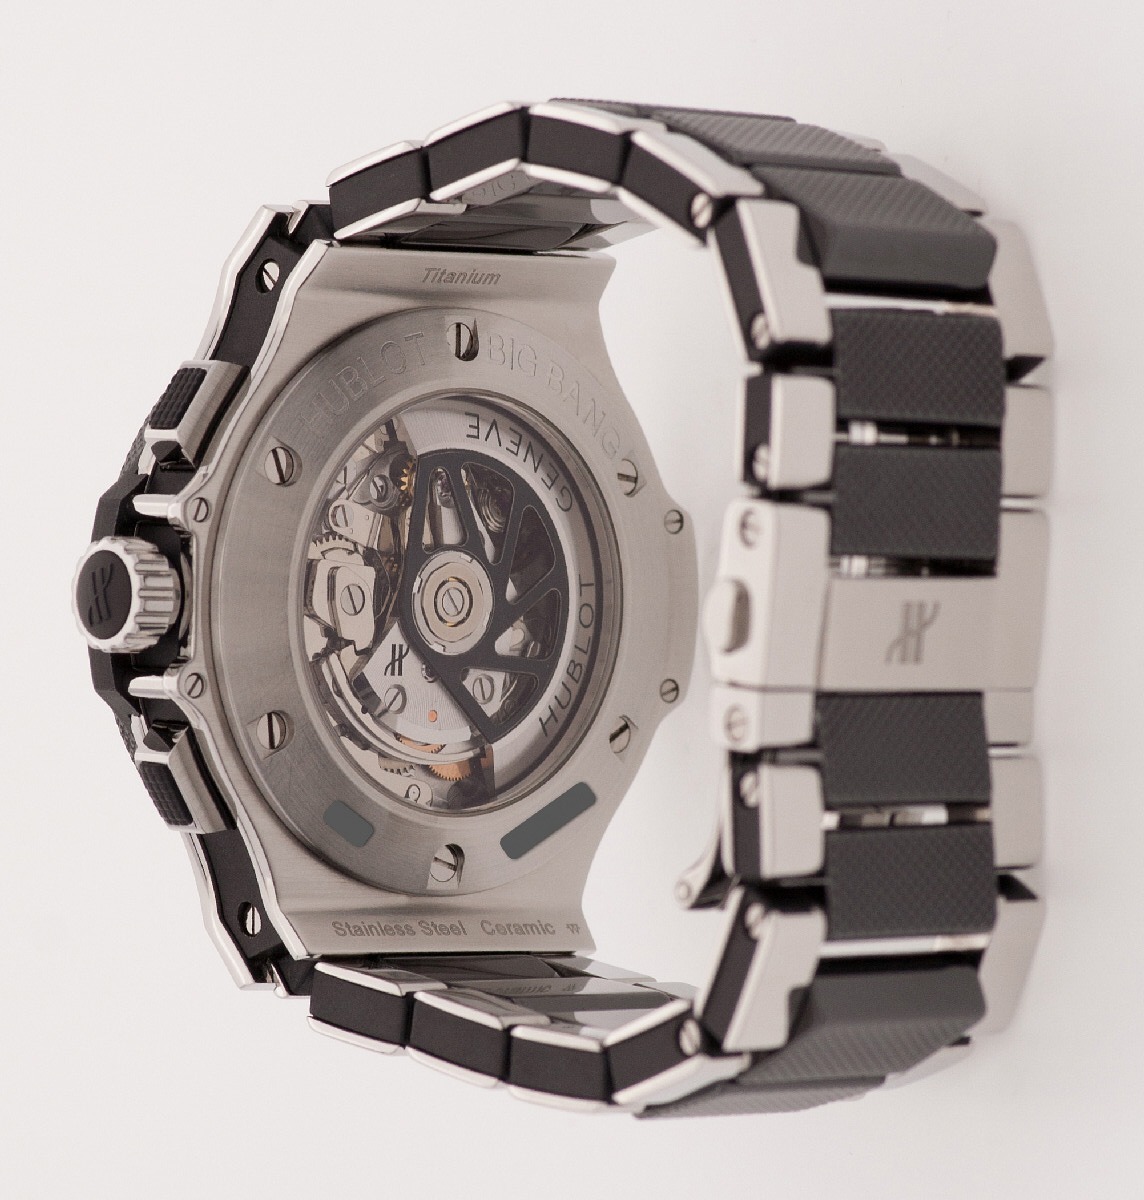 Hublot Big Bang Evolution Chronograph 44MM watch,  (bi - colored) silver and black